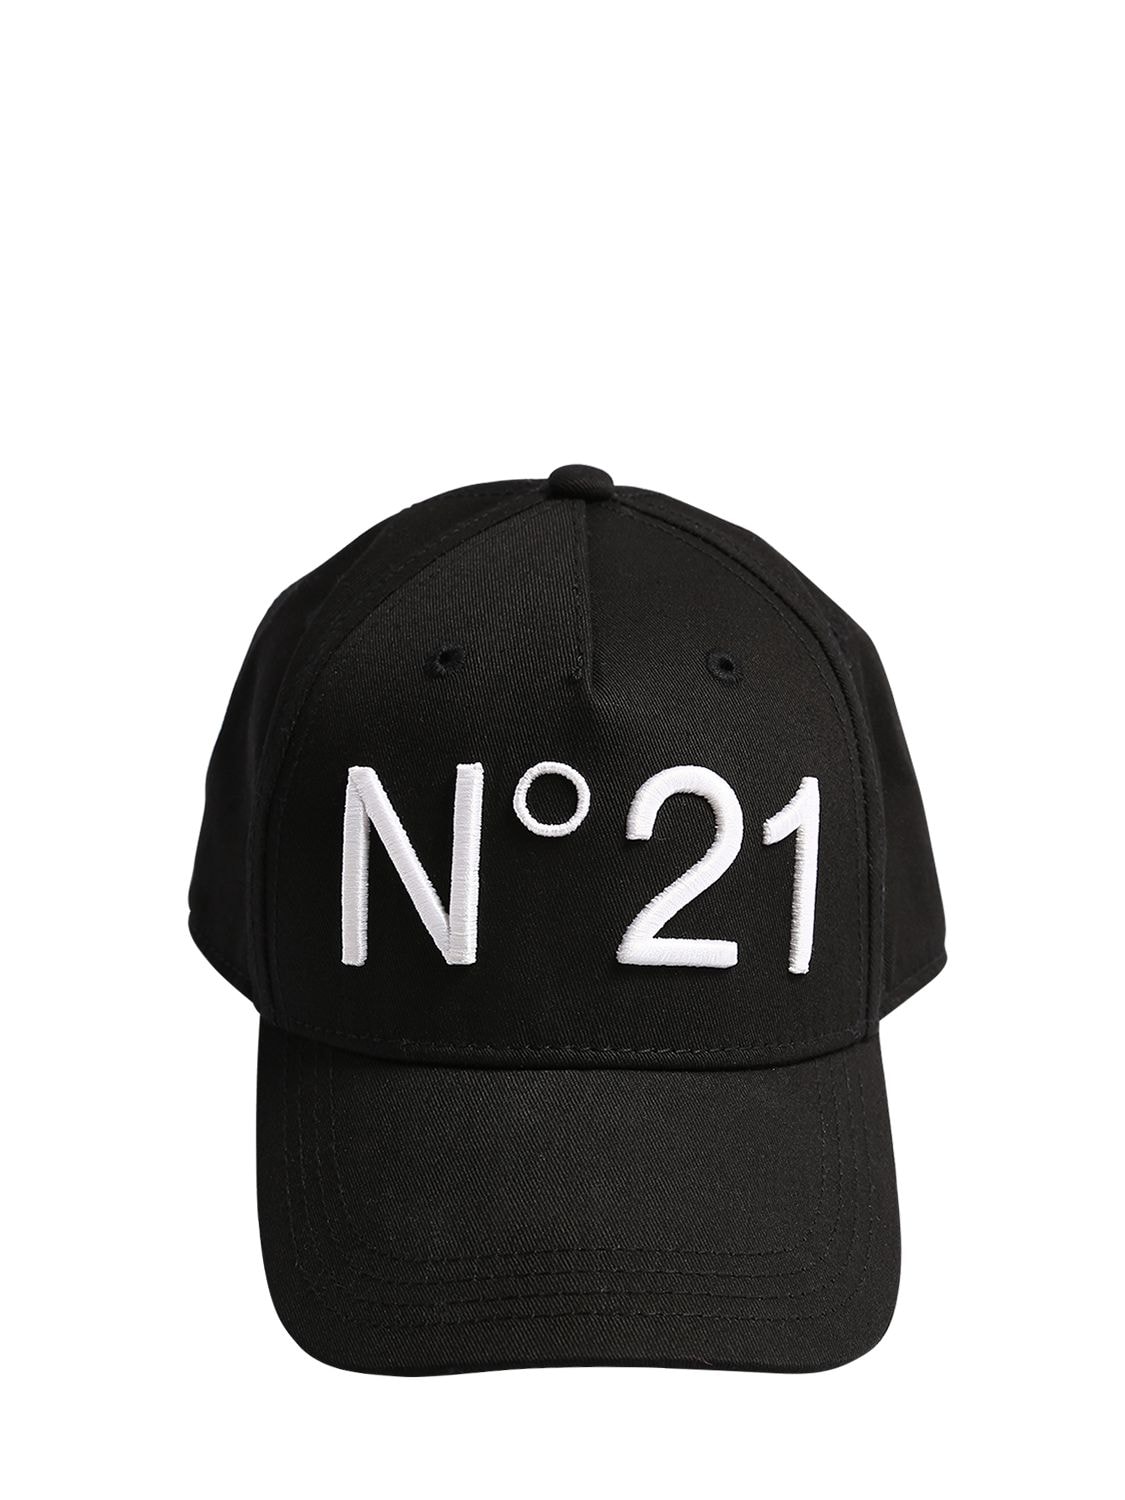 N°21 COTTON GABARDINE BASEBALL HAT,72IOES020-ME45MDA1